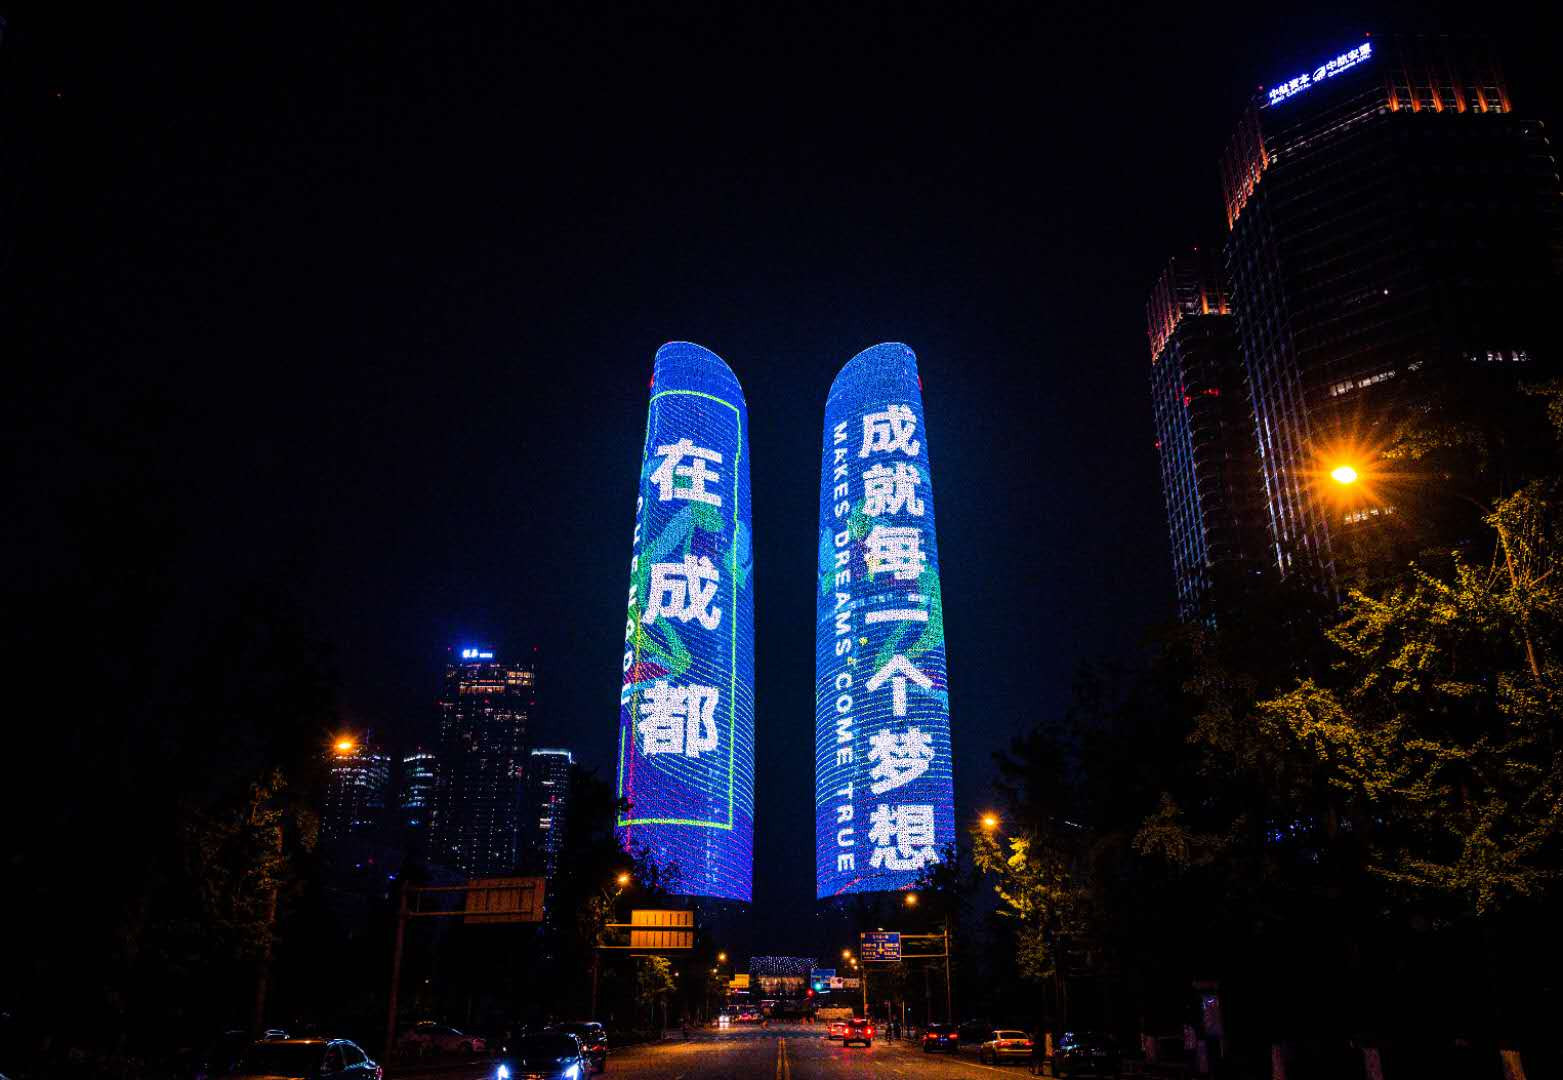 Twin towers illuminated to celebrate Chengdu 2021 sponsorship deal